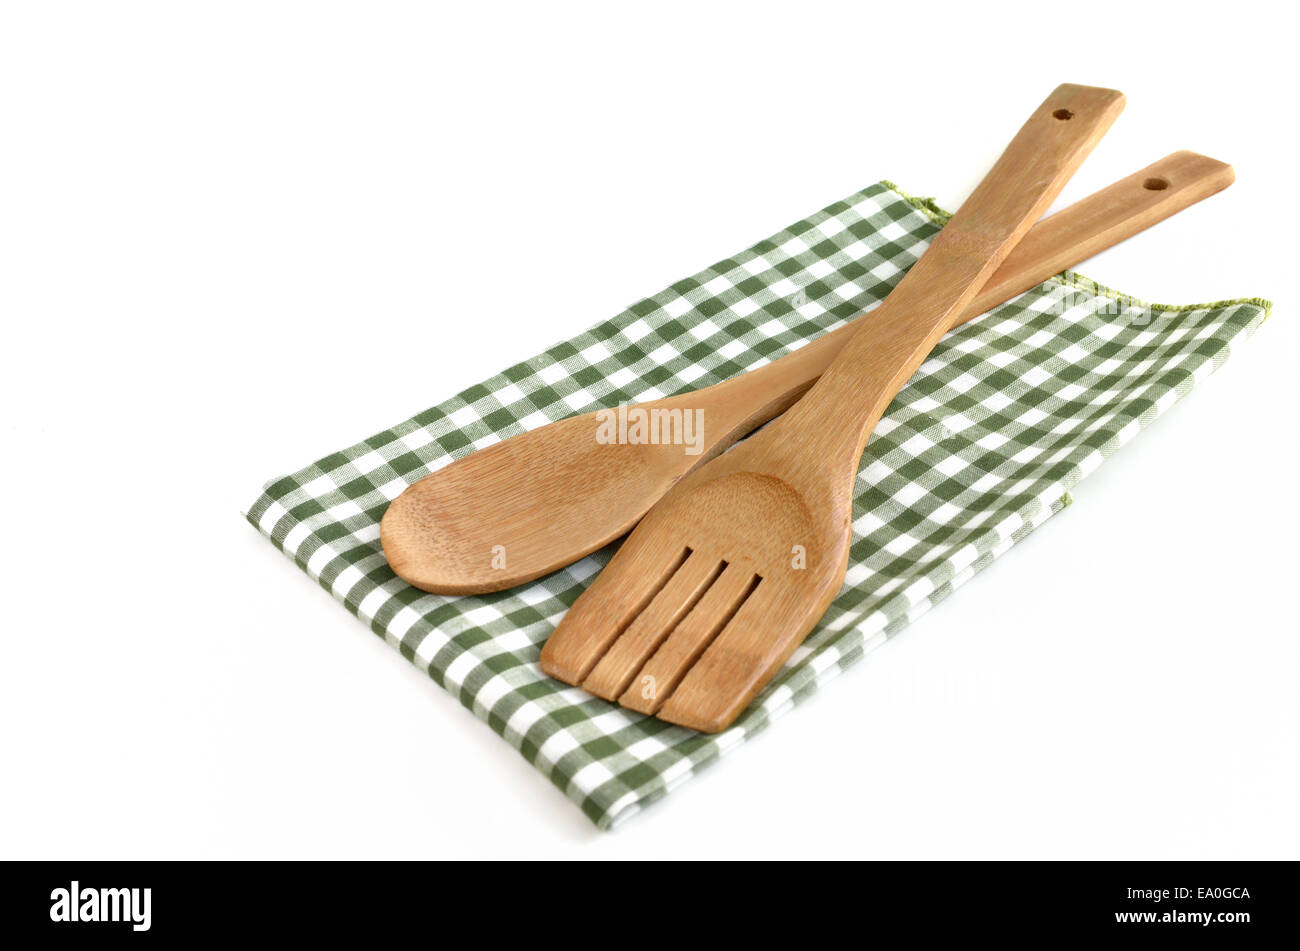 https://c8.alamy.com/comp/EA0GCA/wooden-cooking-utensils-isolated-on-white-background-EA0GCA.jpg